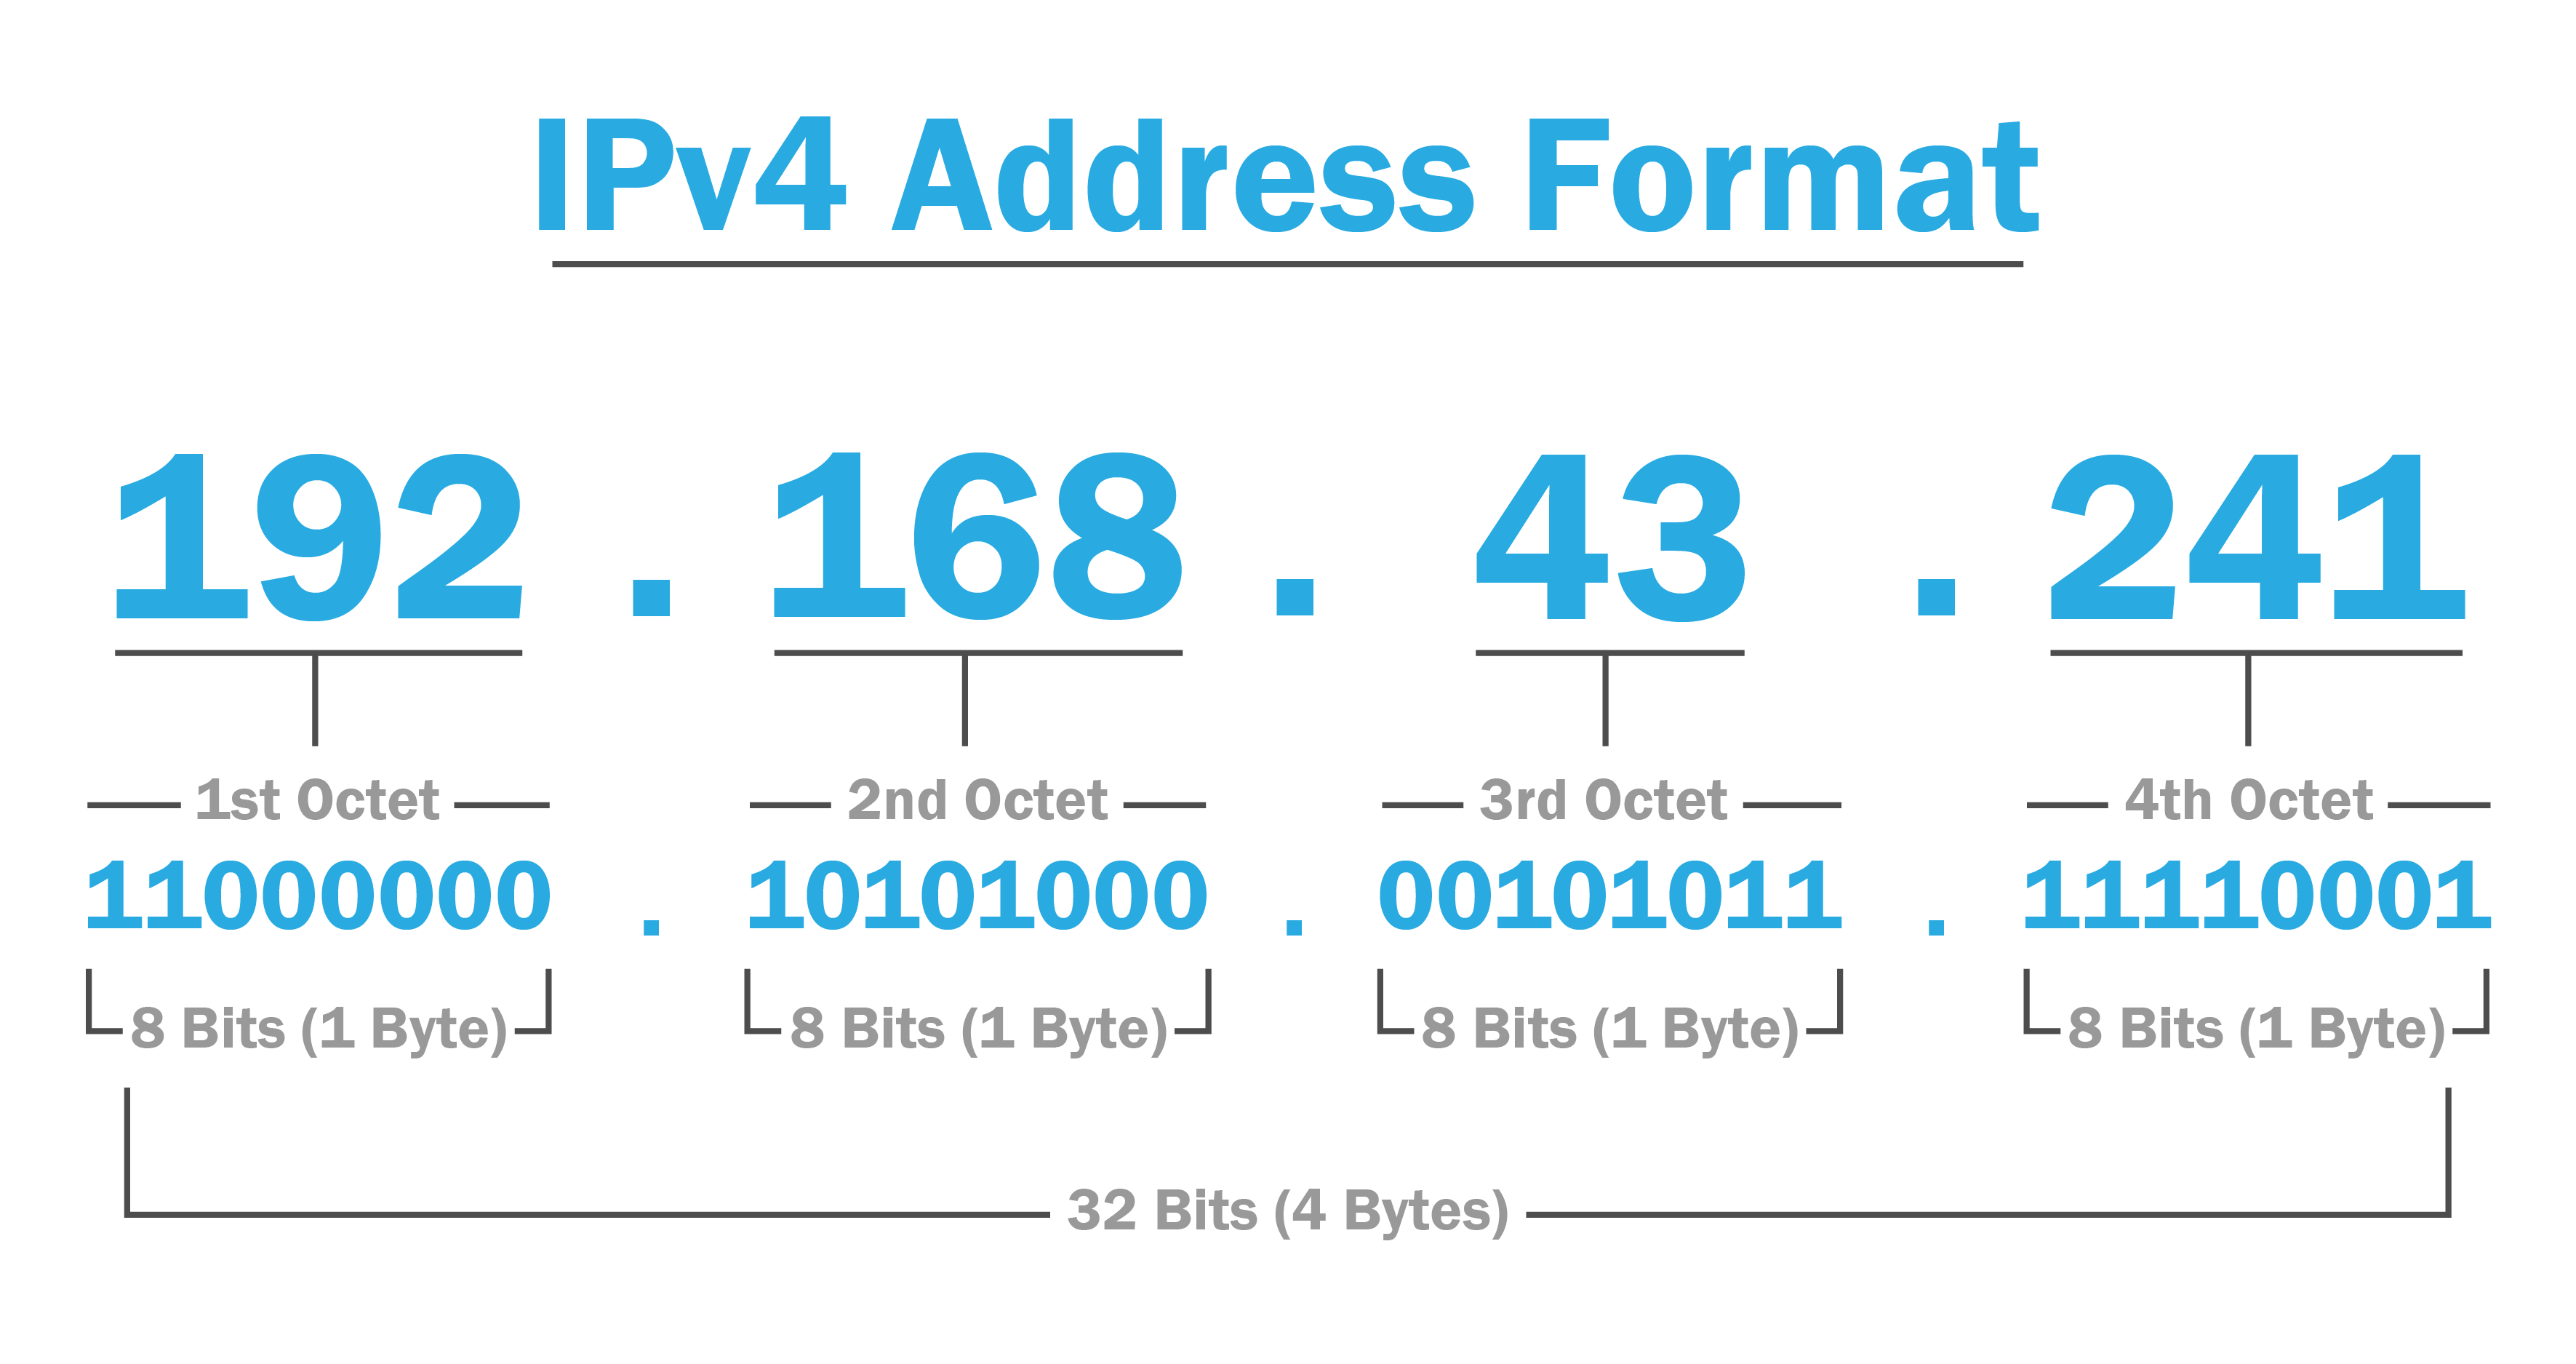 ipv4-address-format-01.webp